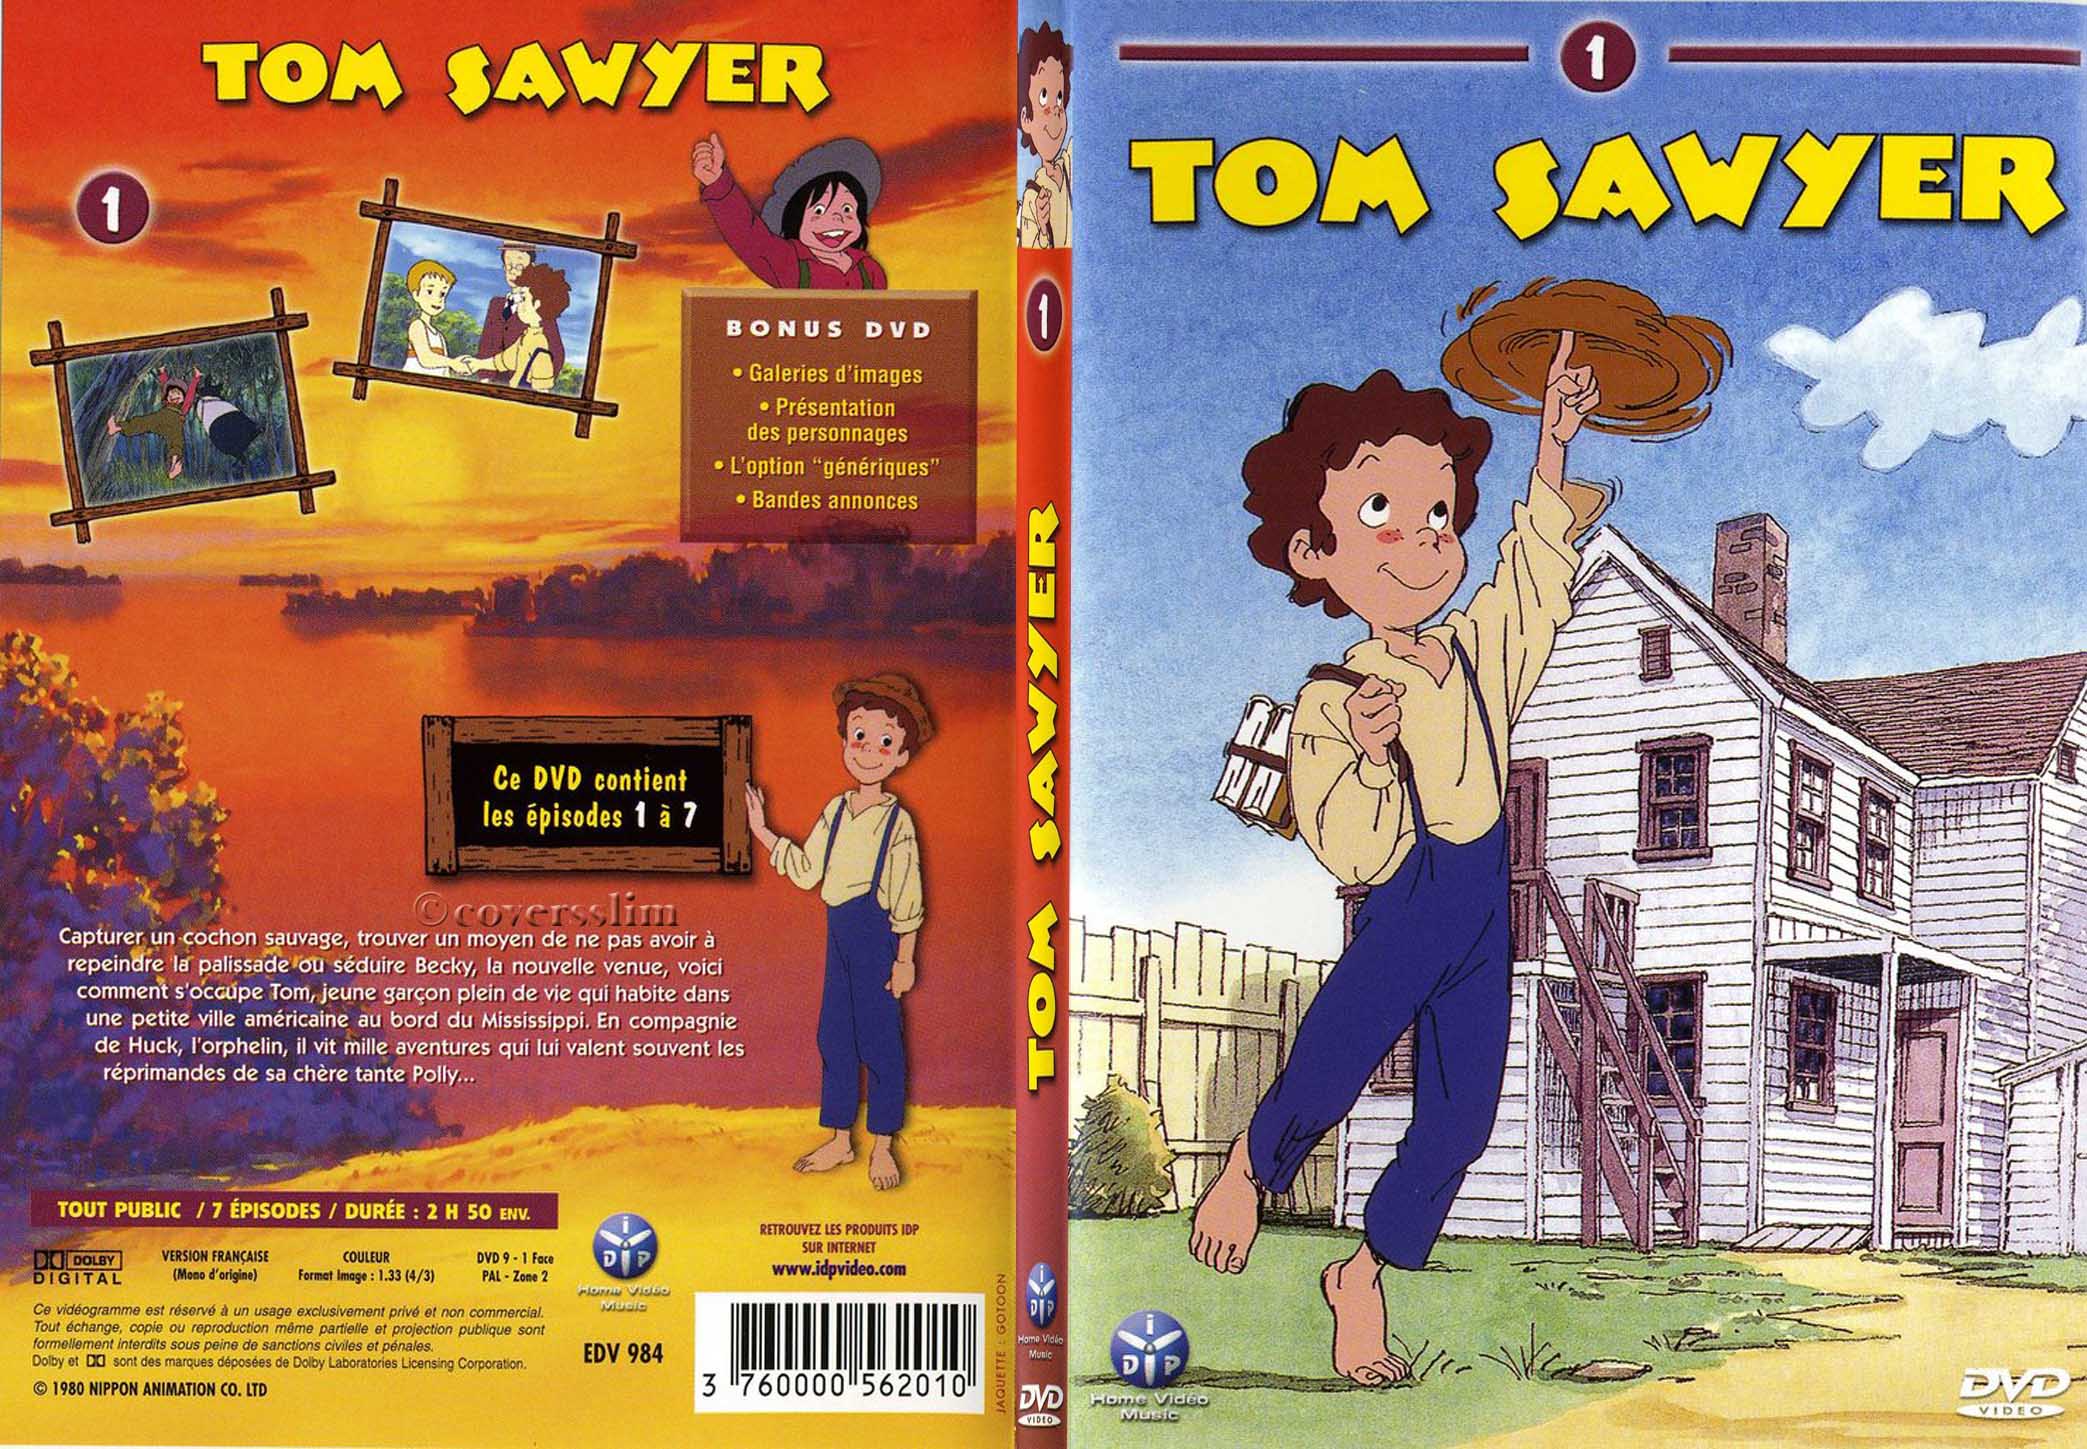 Jaquette DVD Tom Sawyer vol 1 - SLIM